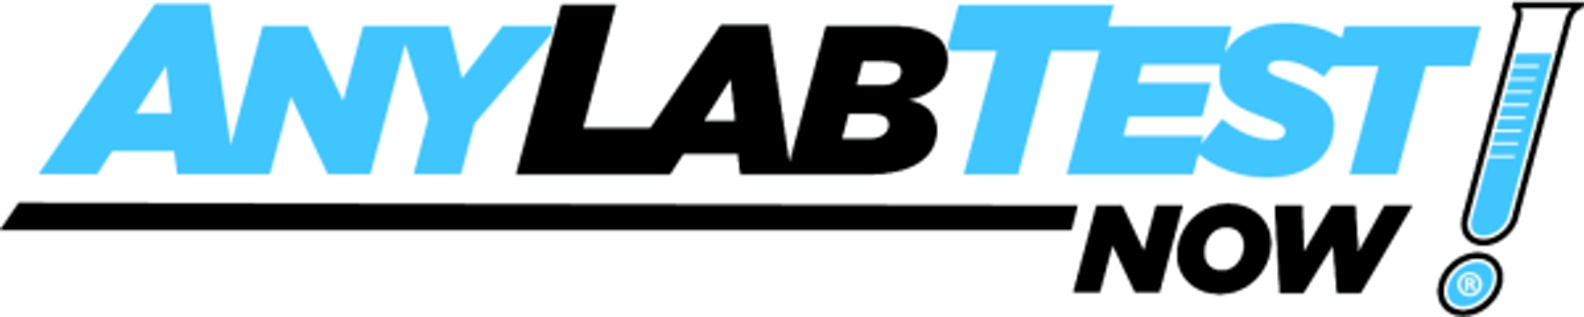 Any Lab Test Now - Houston - North Loop Logo